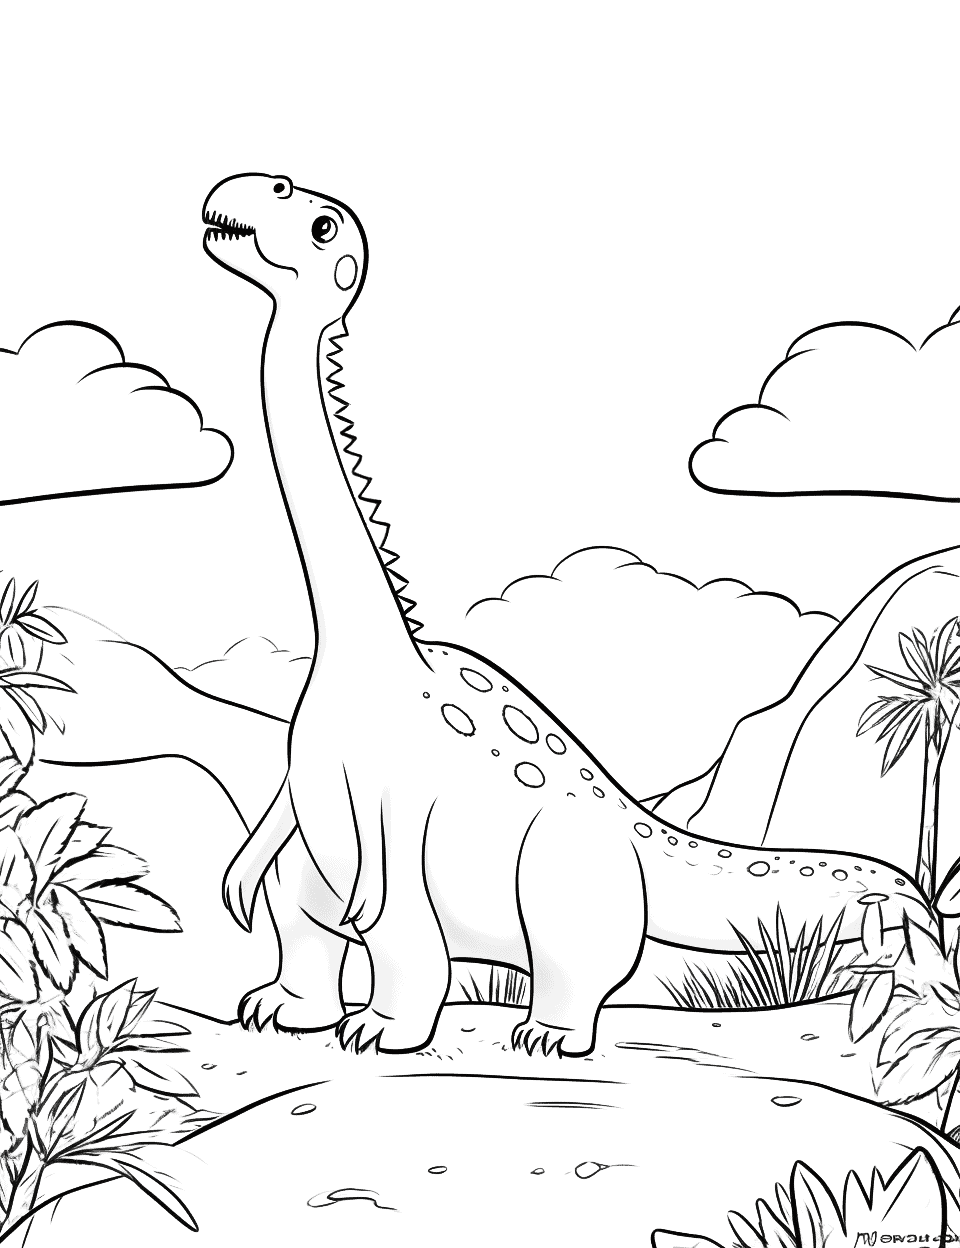 Camp Cretaceous Dinosaur Coloring Page - A scene from Camp Cretaceous featuring dinosaurs under the sky.